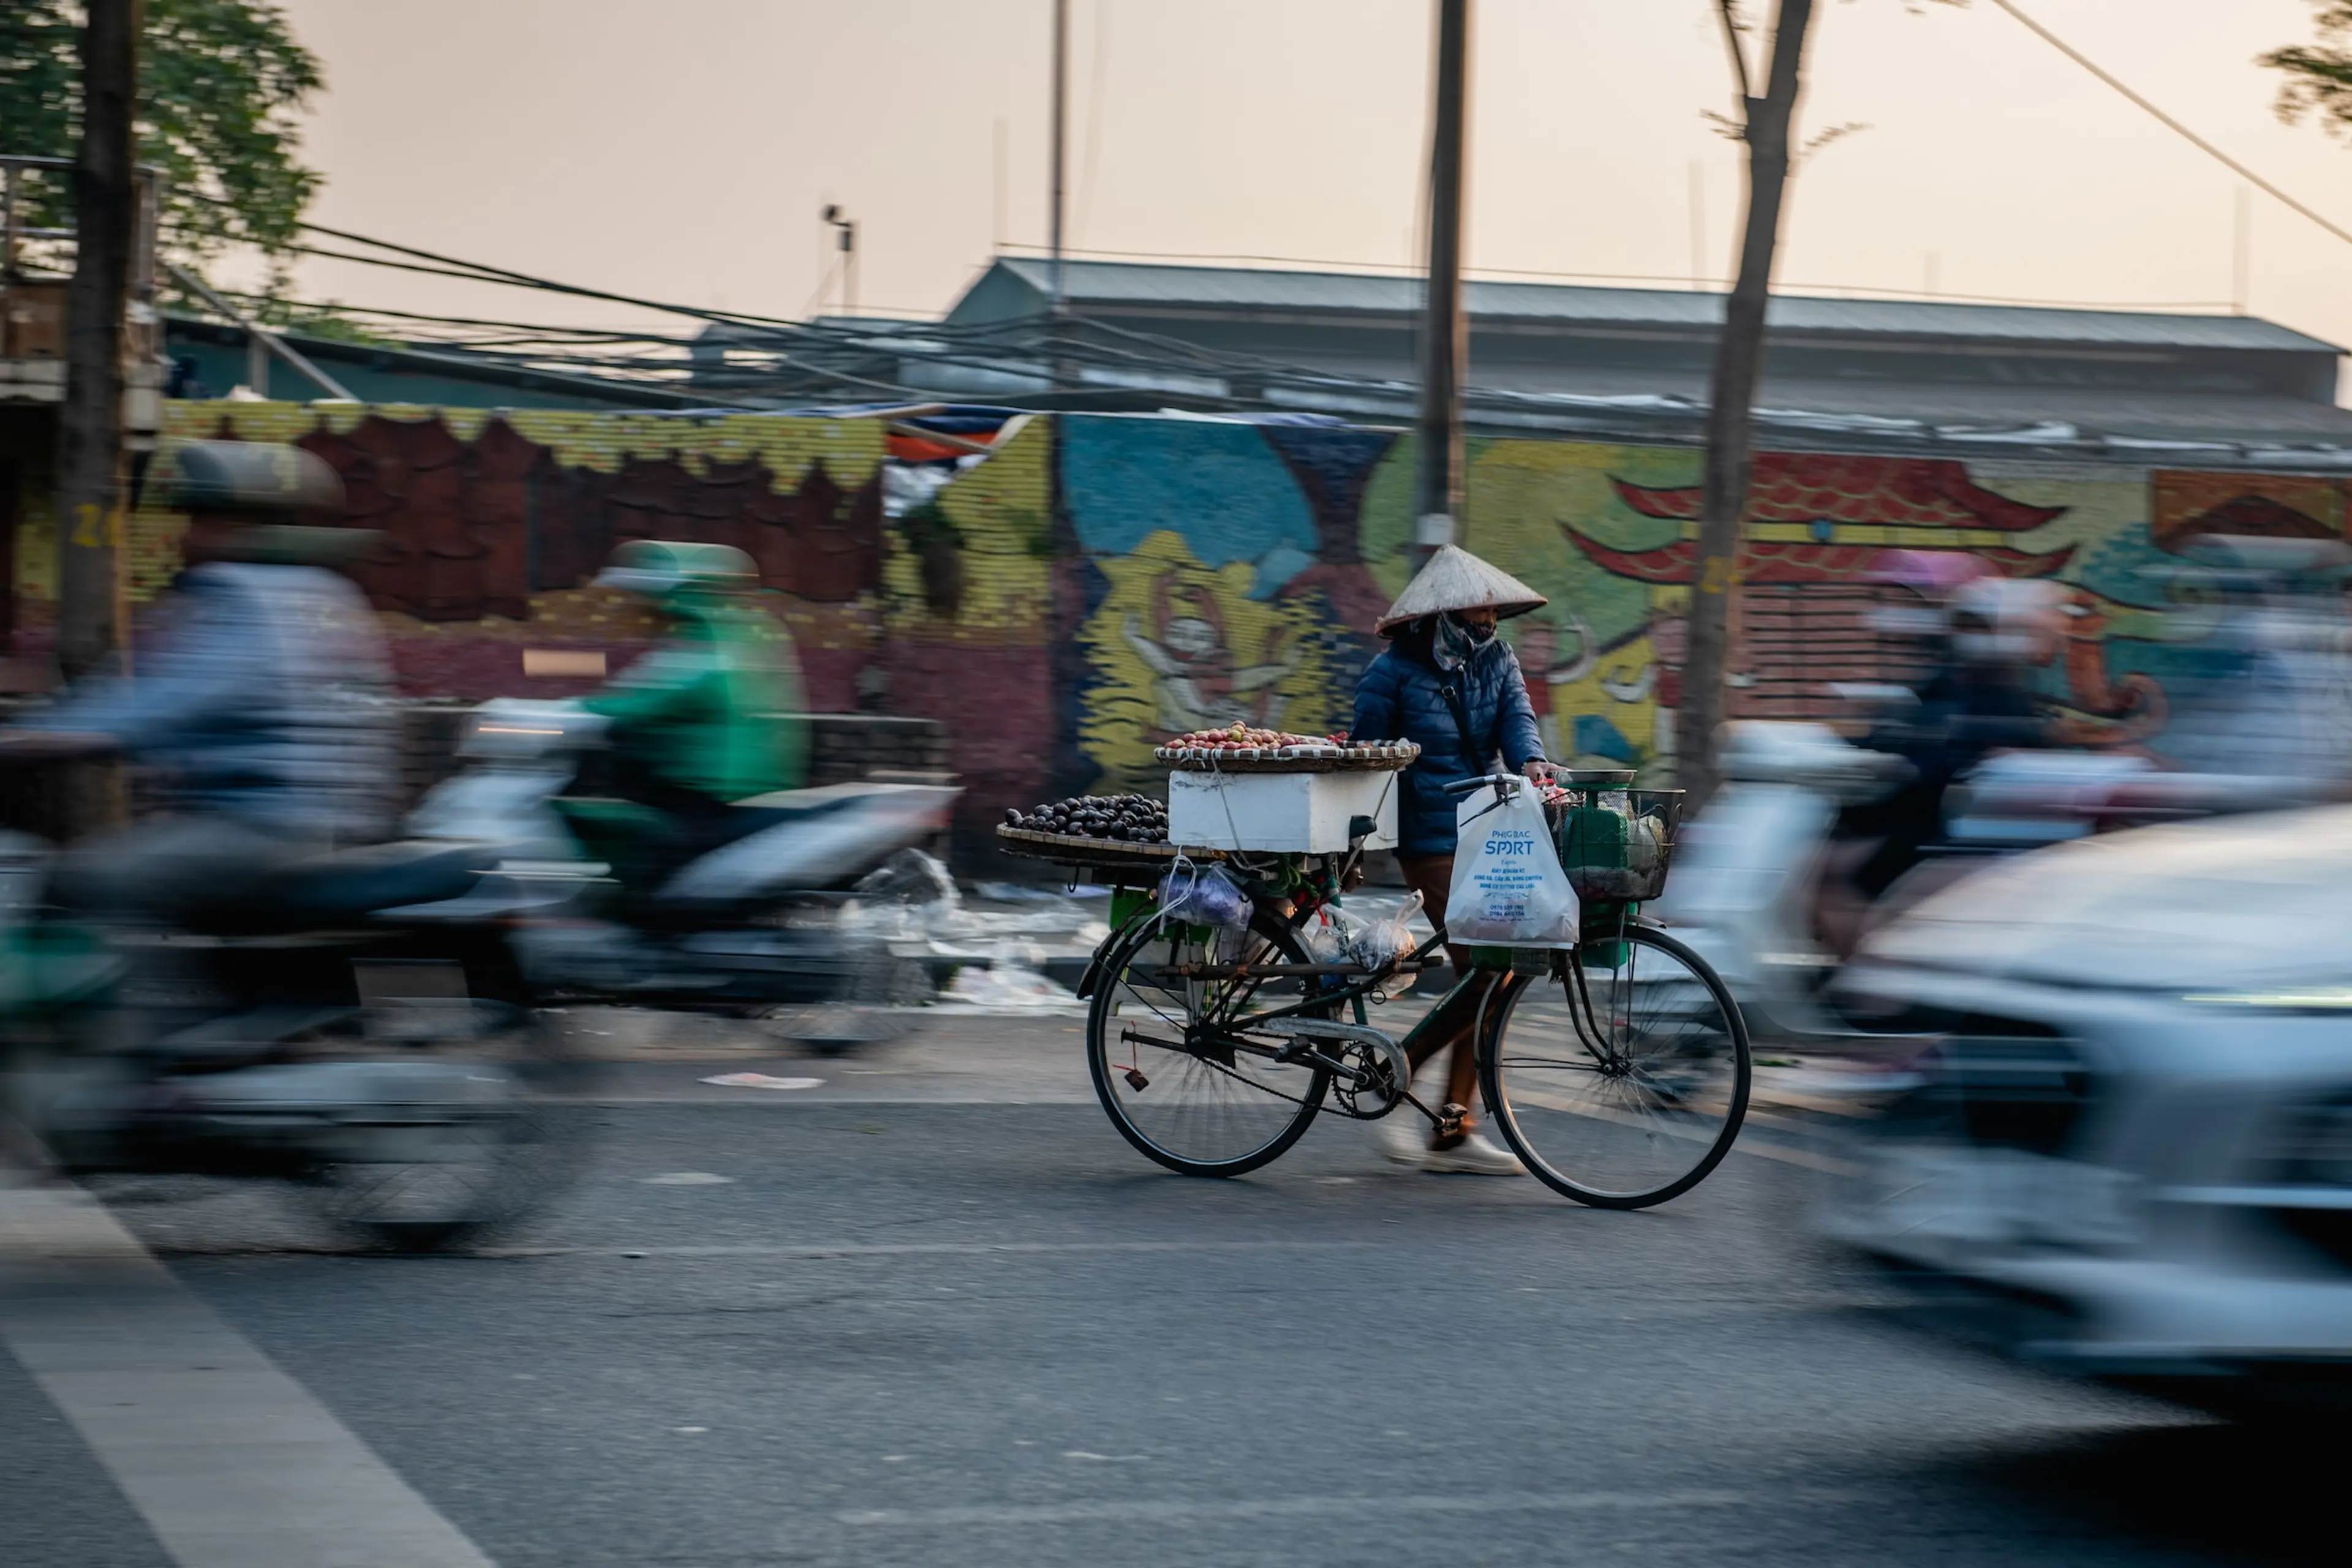 Crossing the road in Hanoi - capital of Vietnam